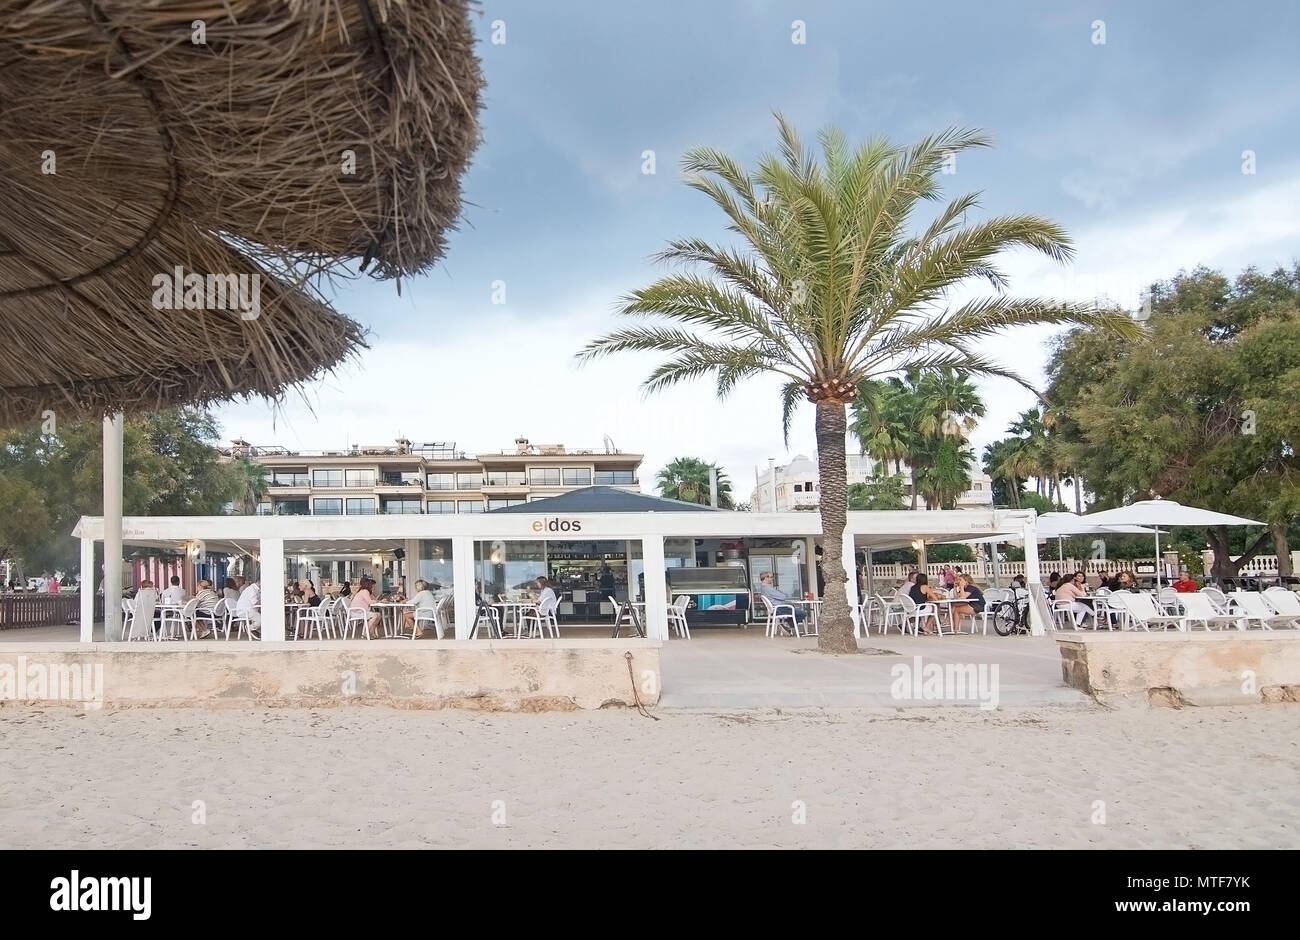 MALLORCA, Balearen, SPANIEN - 22. SEPTEMBER 2017: Eldos Beach bar vom Strand am 22. September 2017 auf Mallorca, Balearen, Spanien. Stockfoto